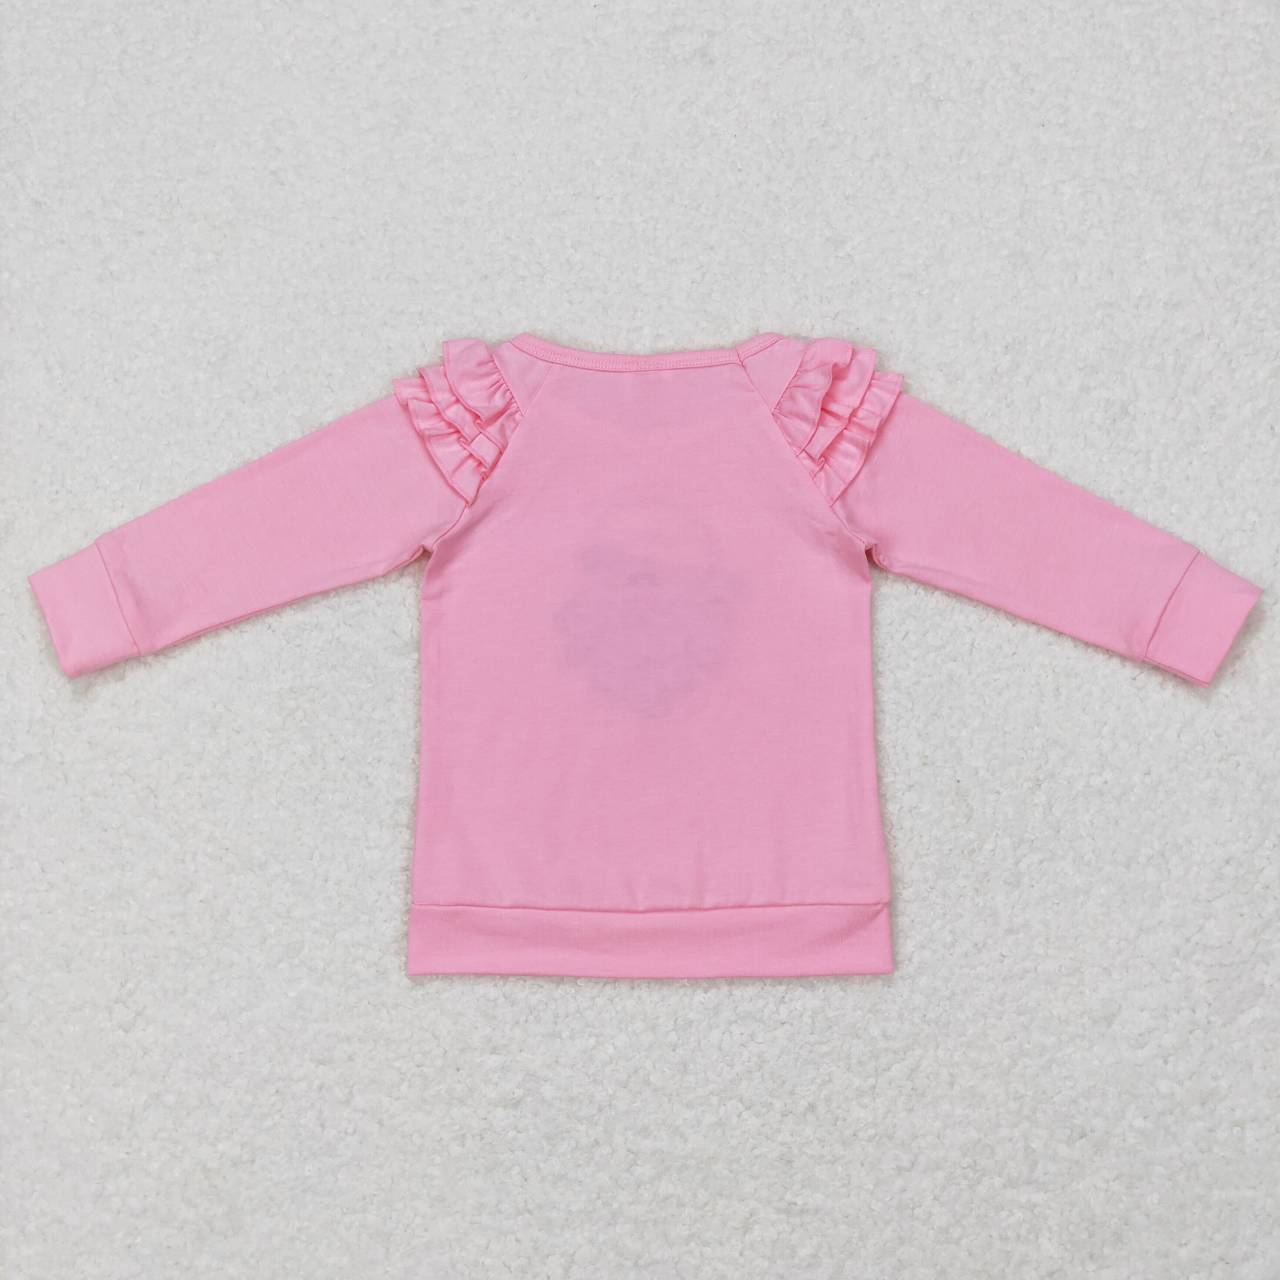 GT0369  Pink Santa Embroidery Print Girls Christmas Tee Shirt Top